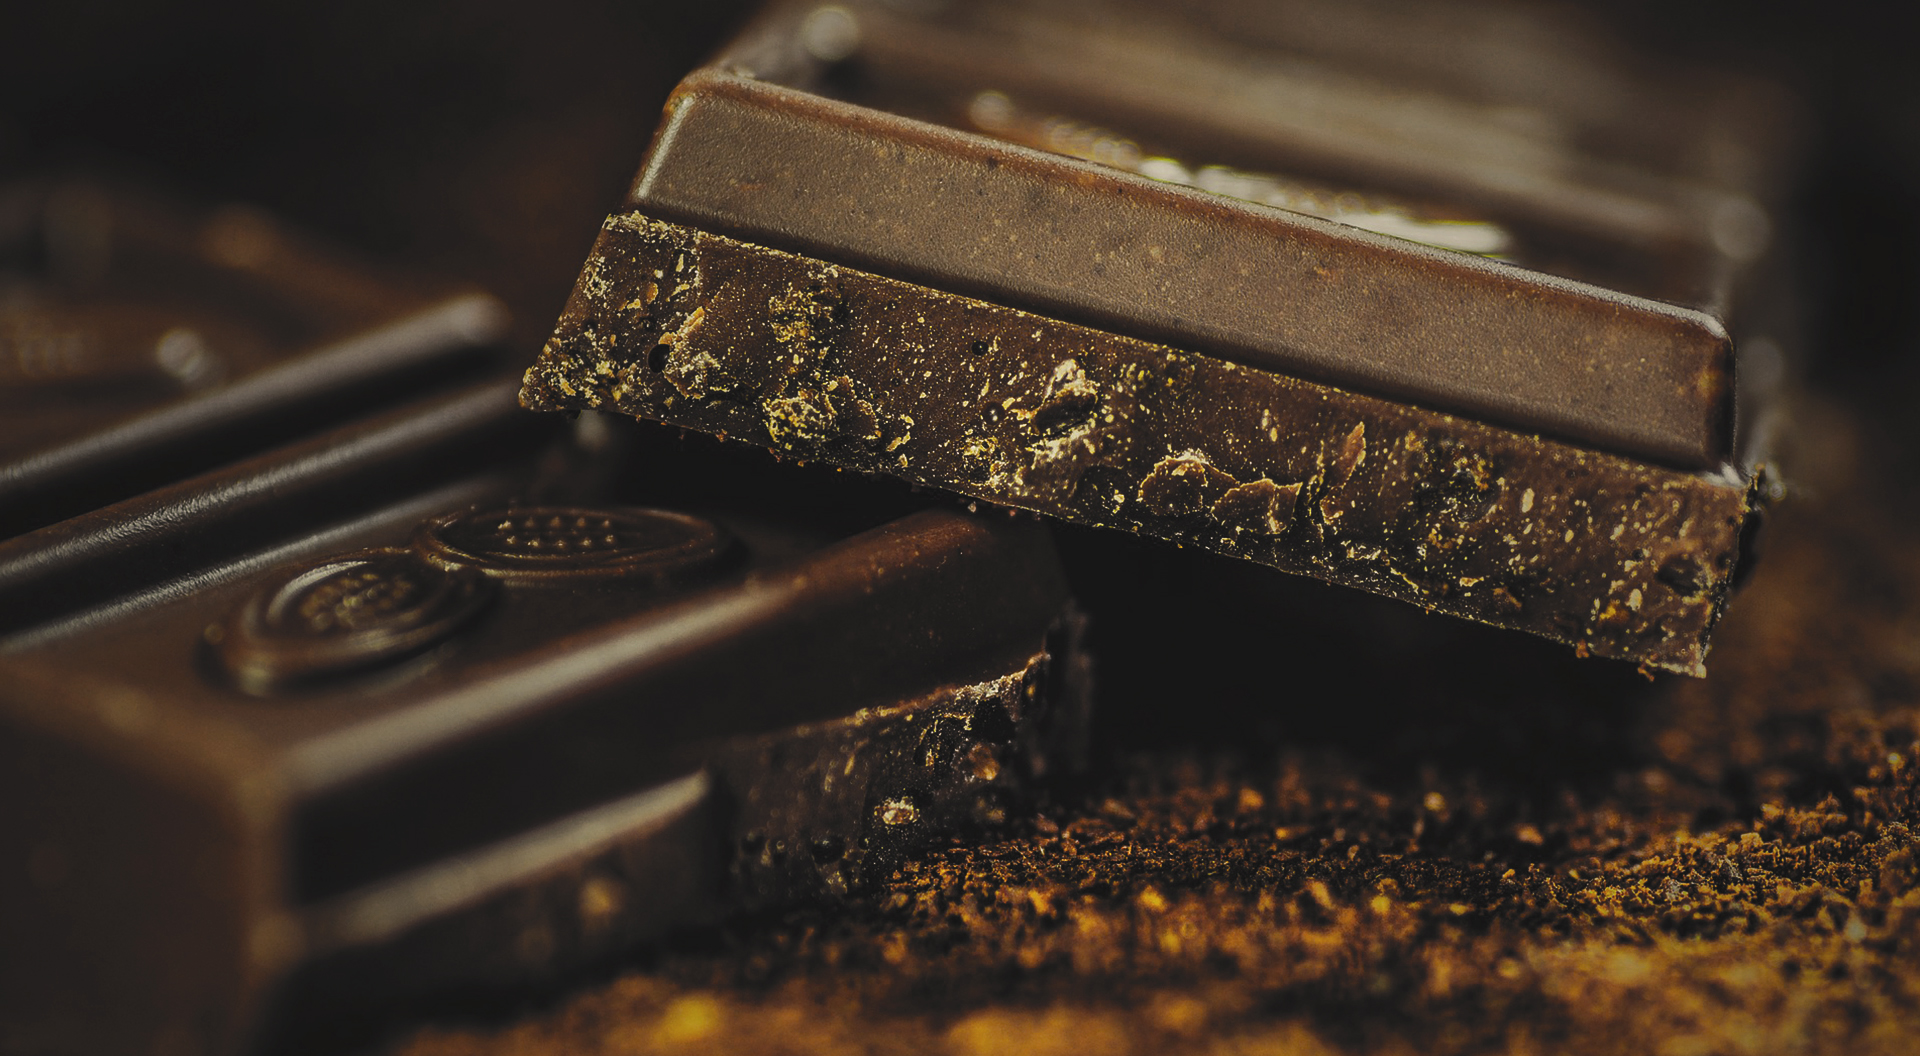 List of Best Chocolate Brands in America